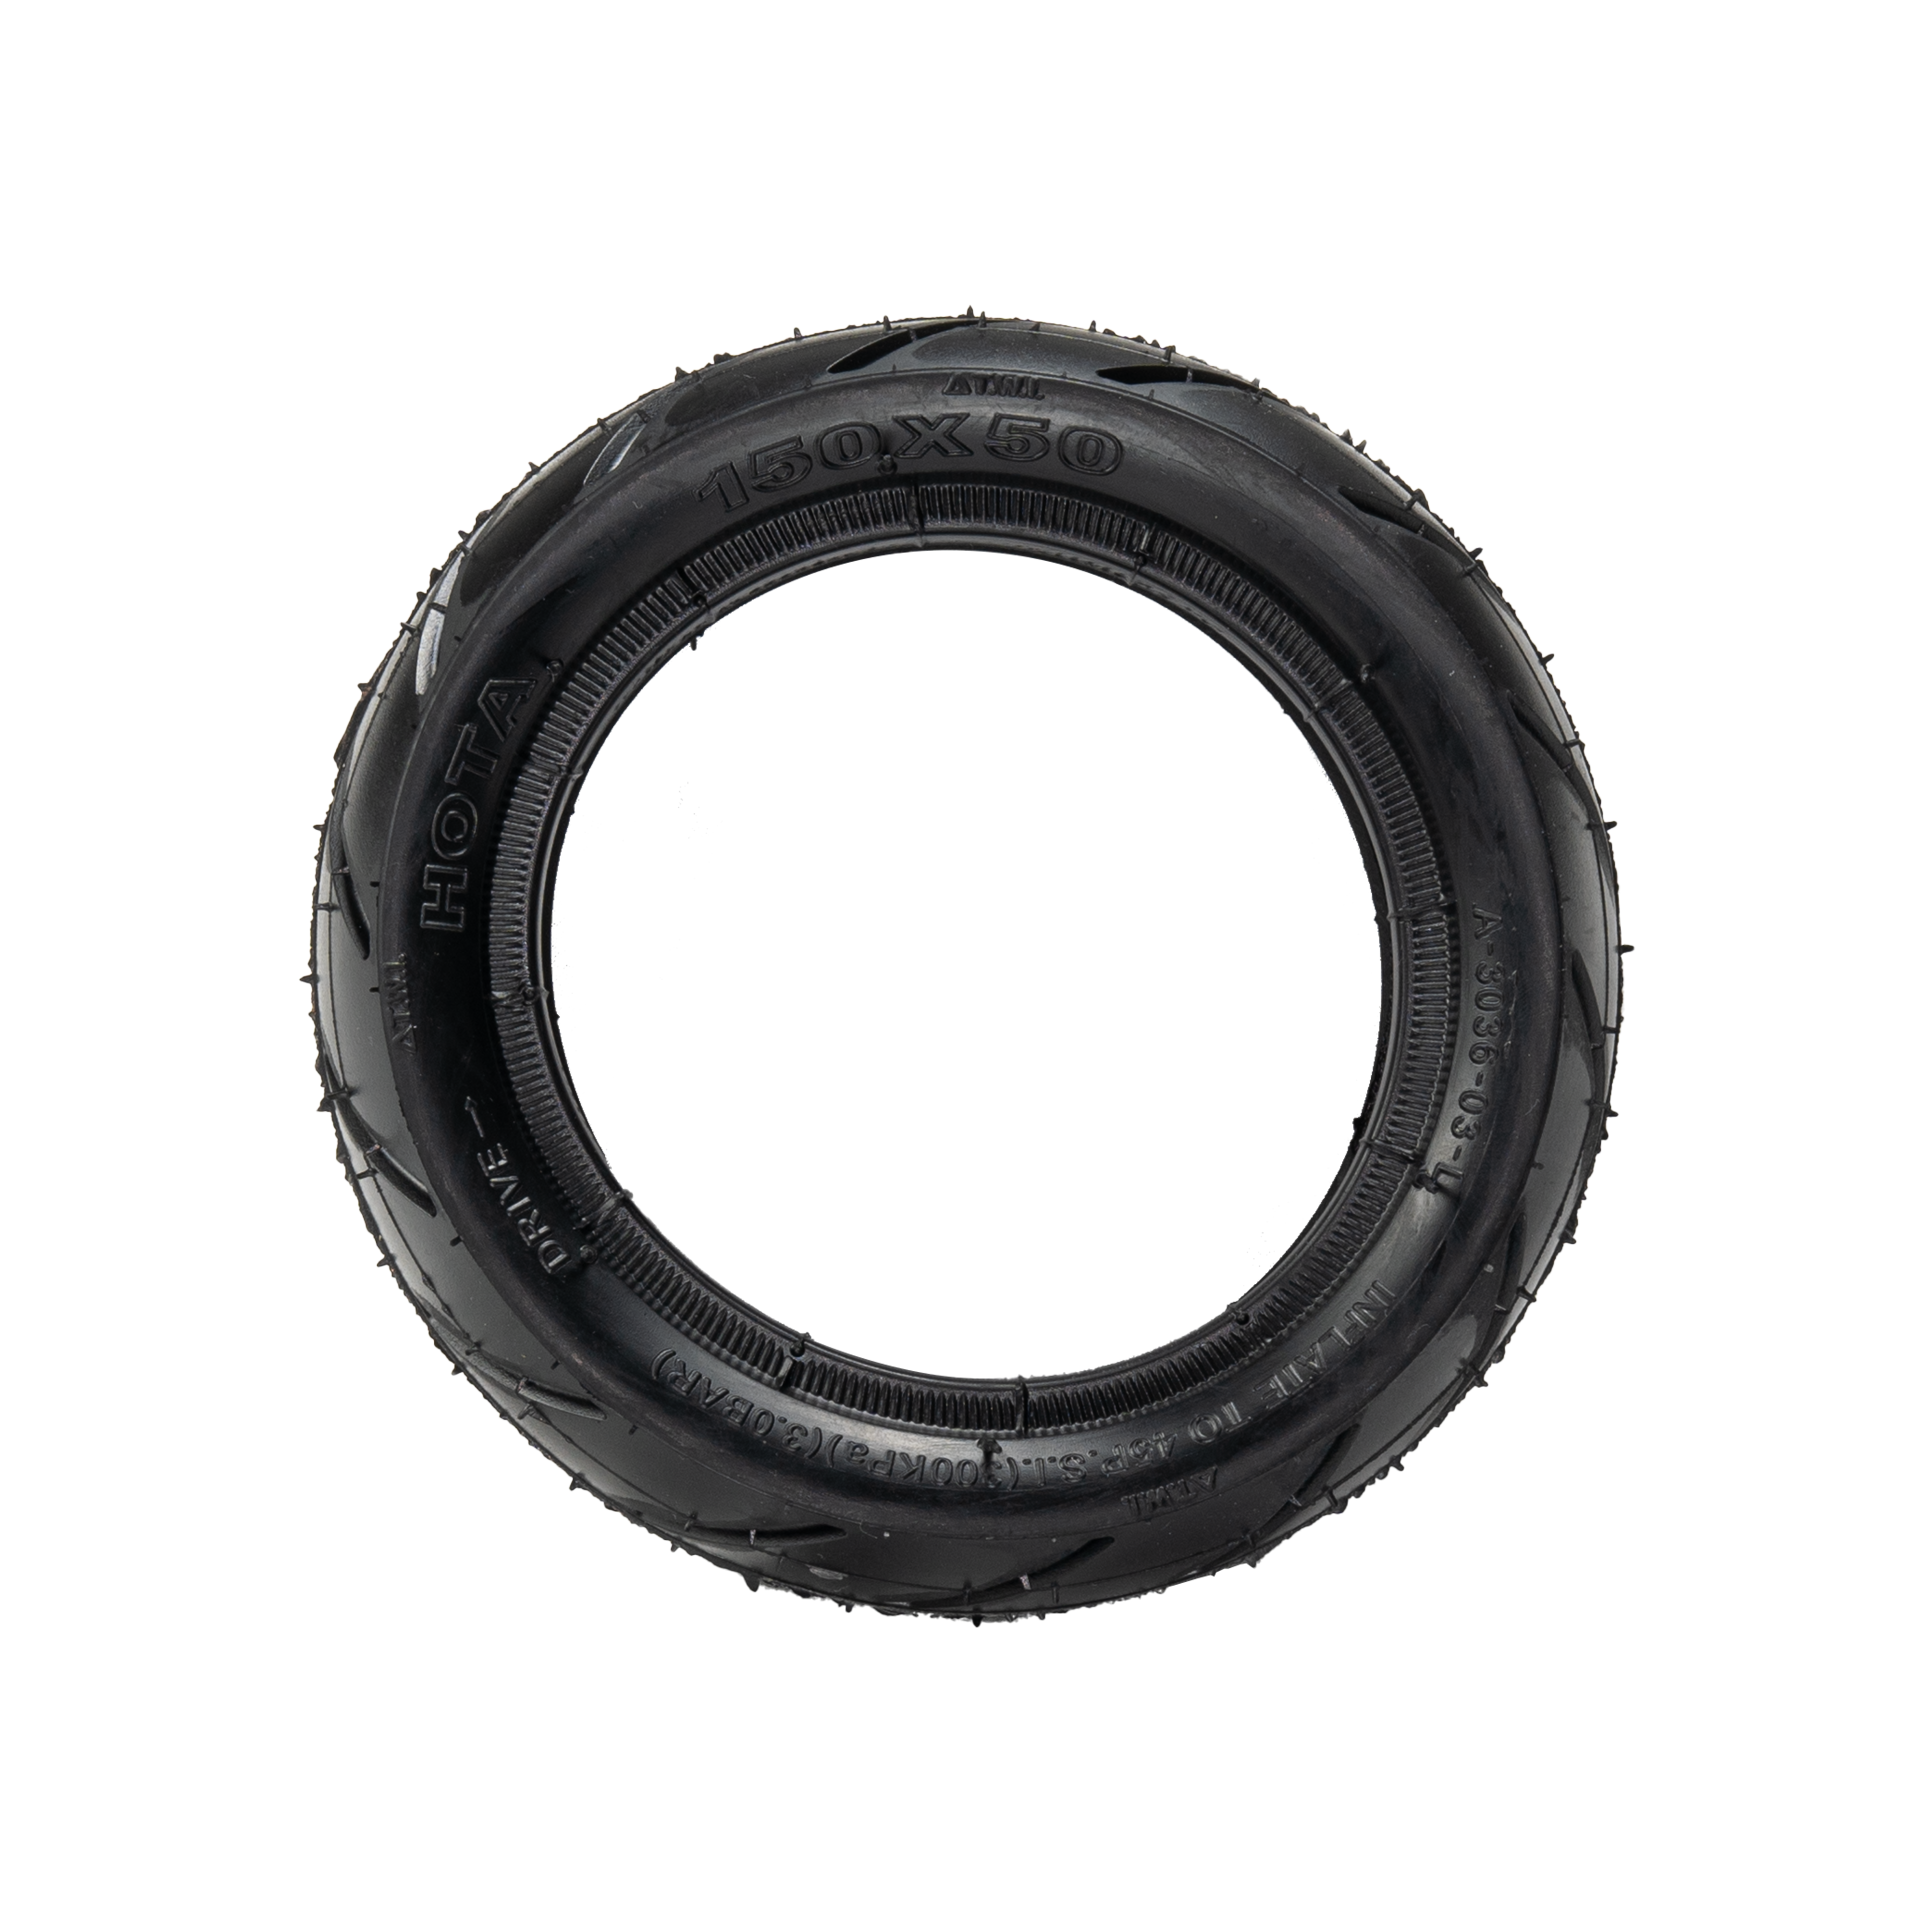 Acedeck® All Terrain 150*50mm Wheel Hota Tire- Nomad N1 2in1 verison